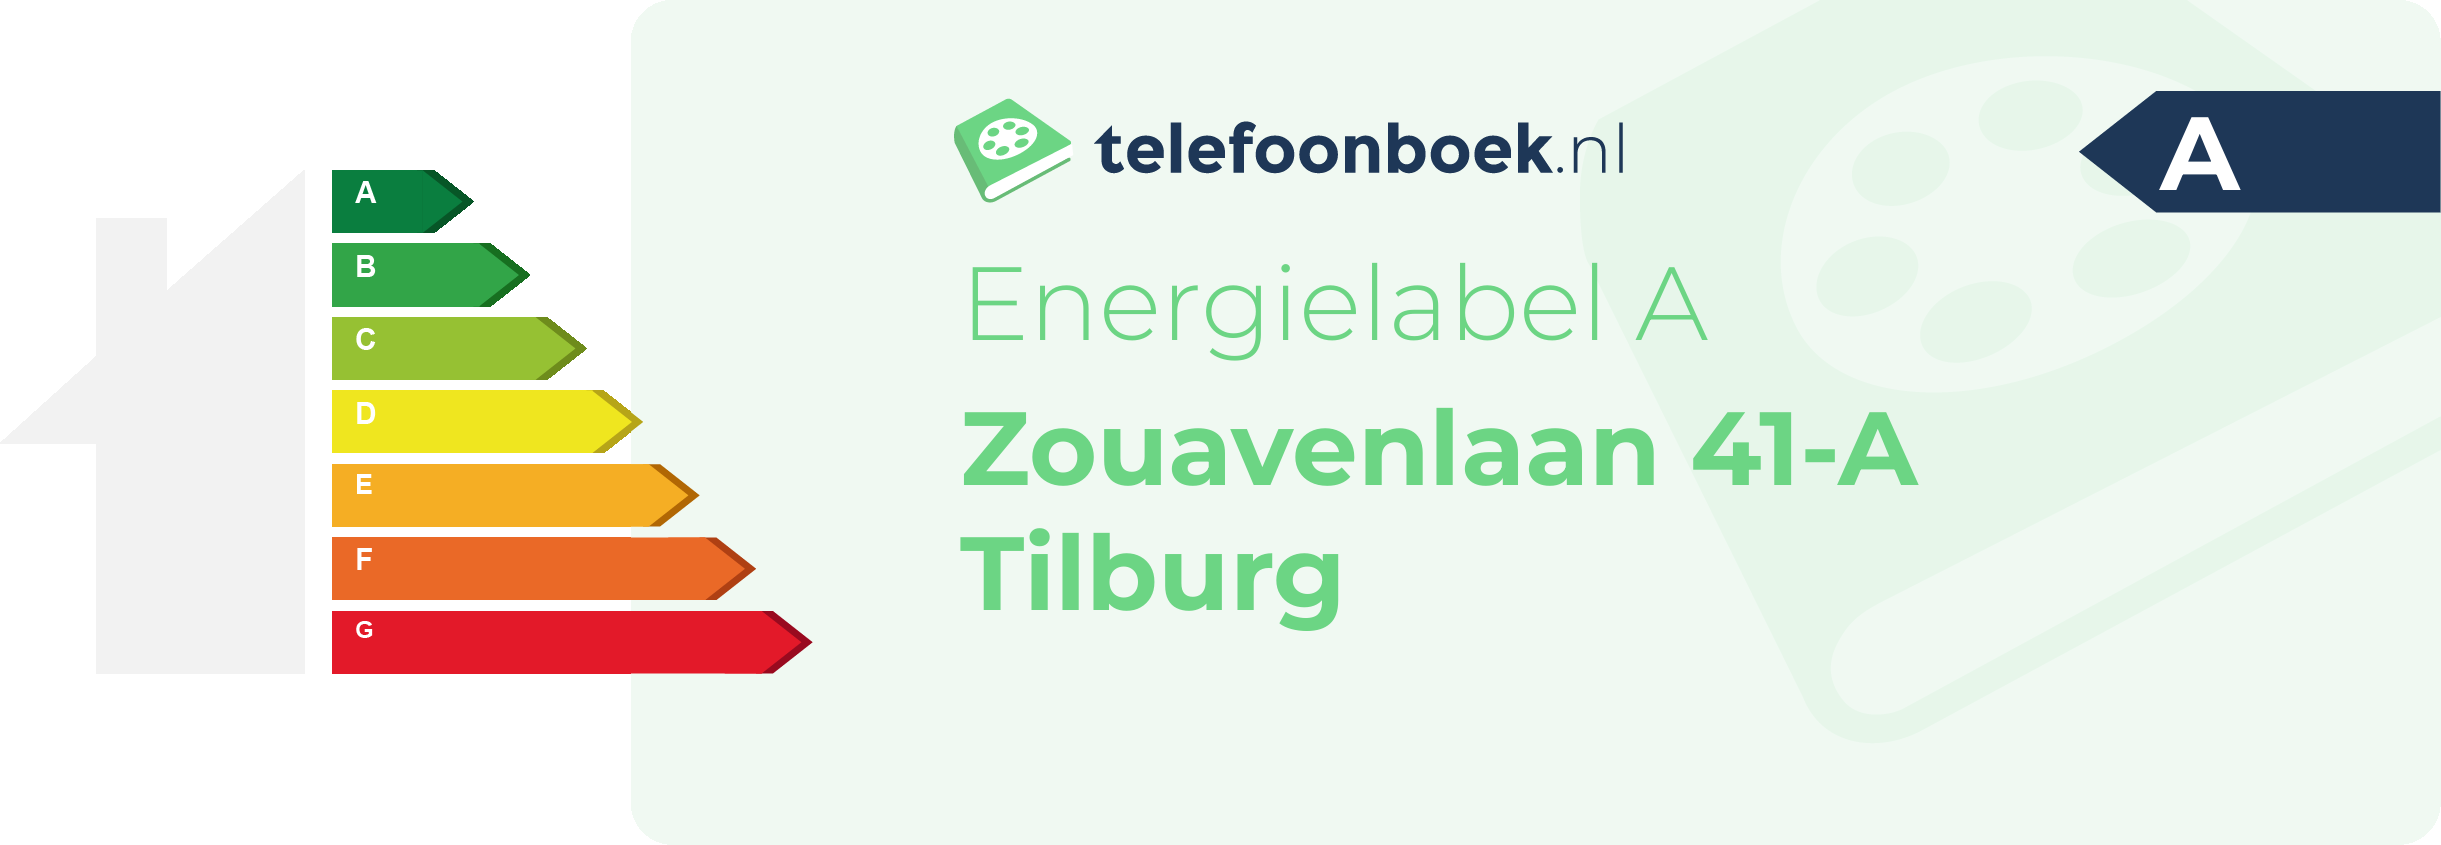 Energielabel Zouavenlaan 41-A Tilburg